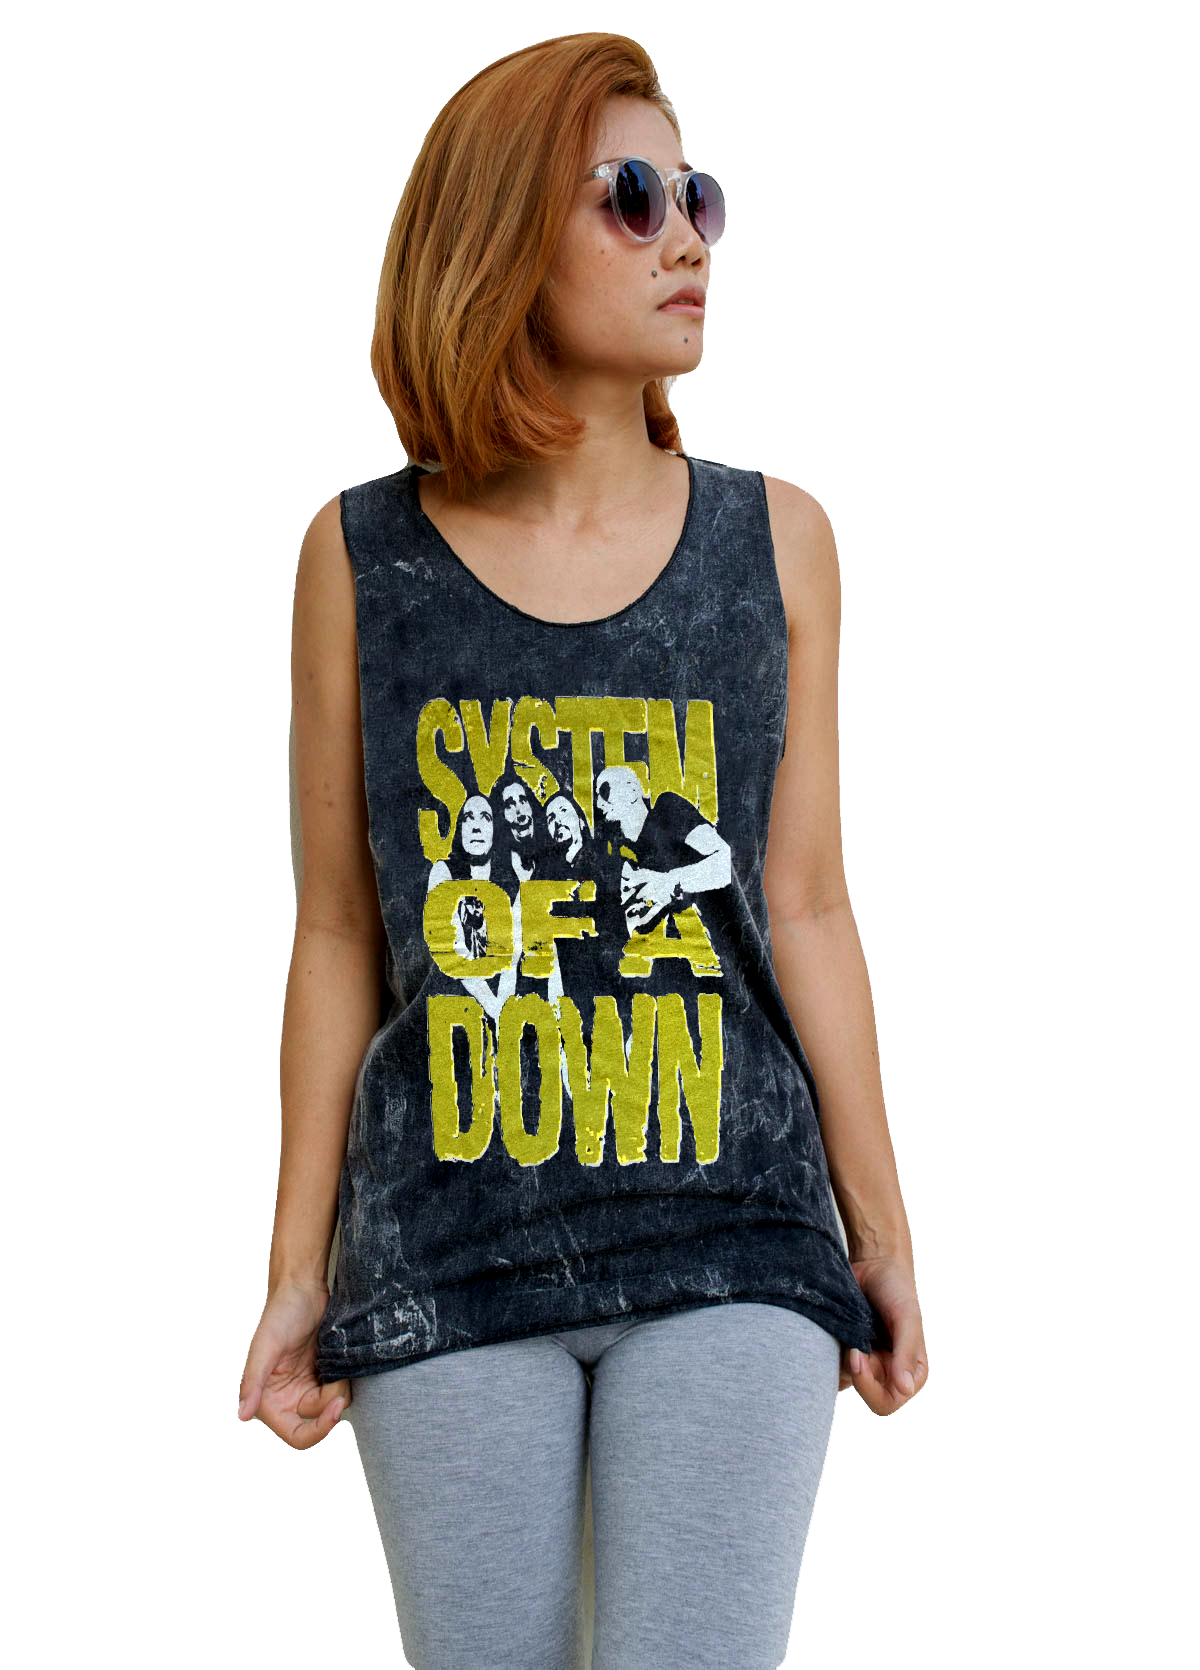 Unisex System Of A Down Tank-Top Singlet vest Sleeveless T-shirt